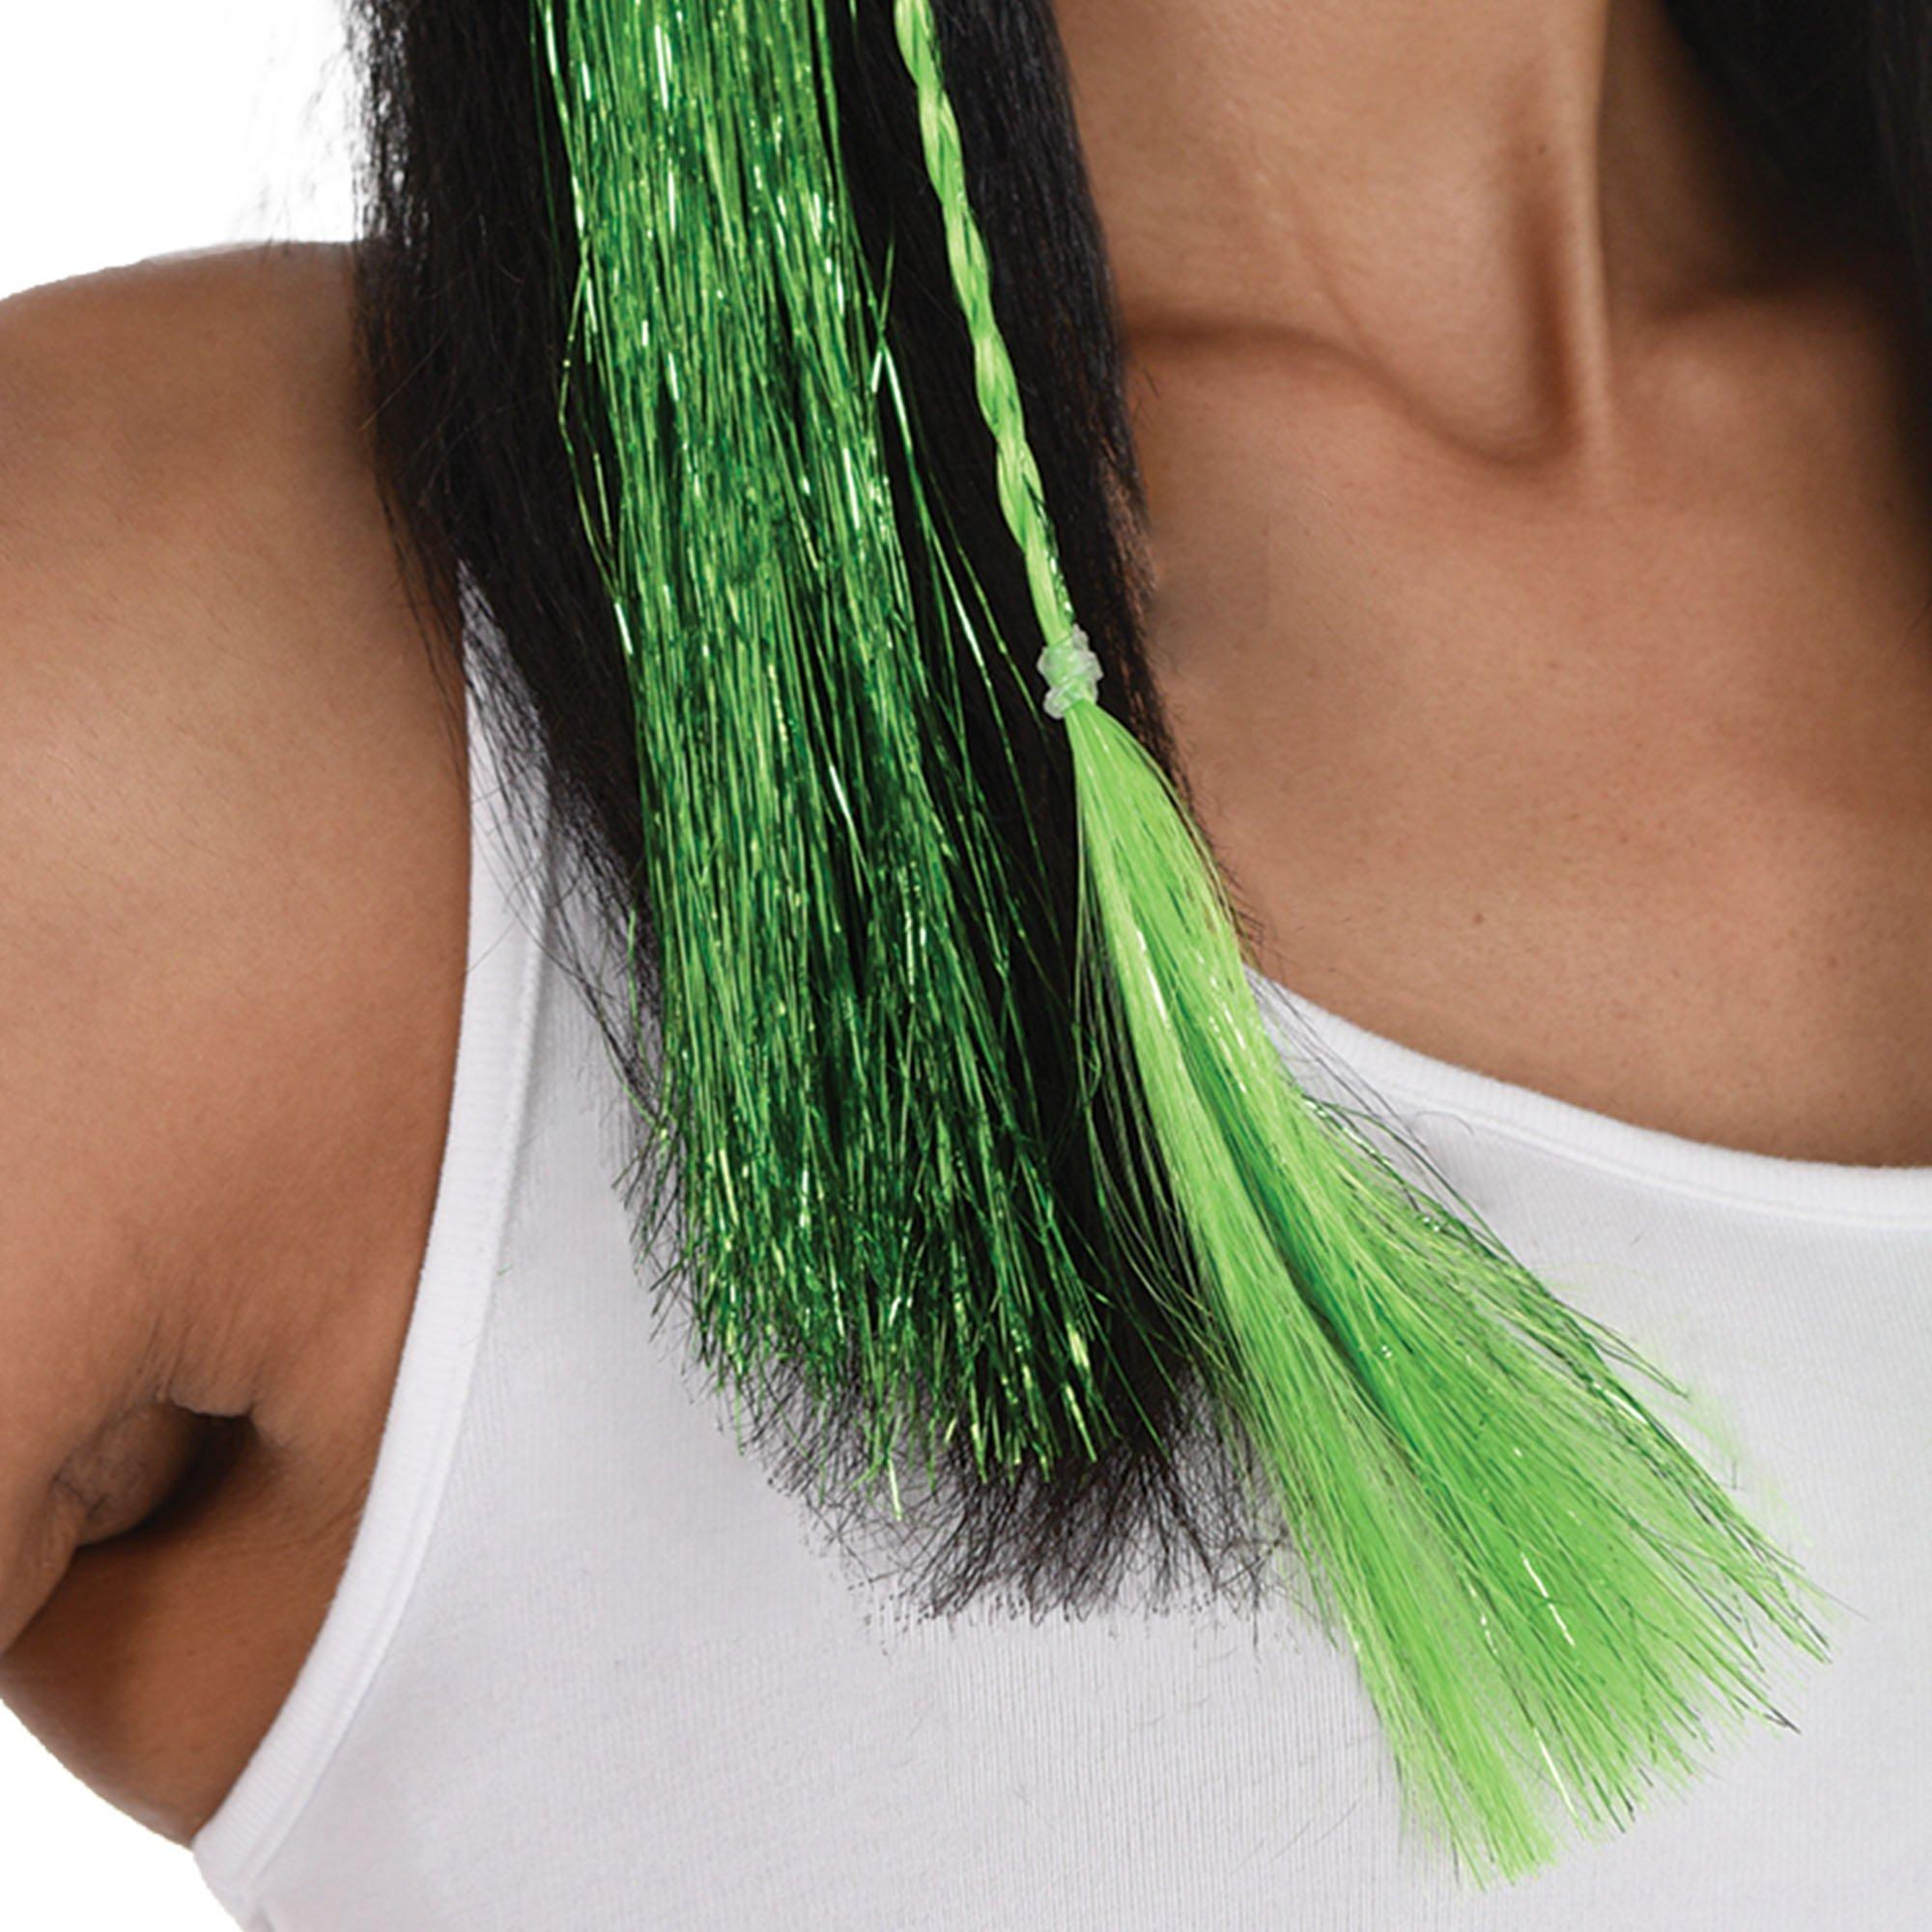 Festive Green Tinsel Hair Extensions, 3pc